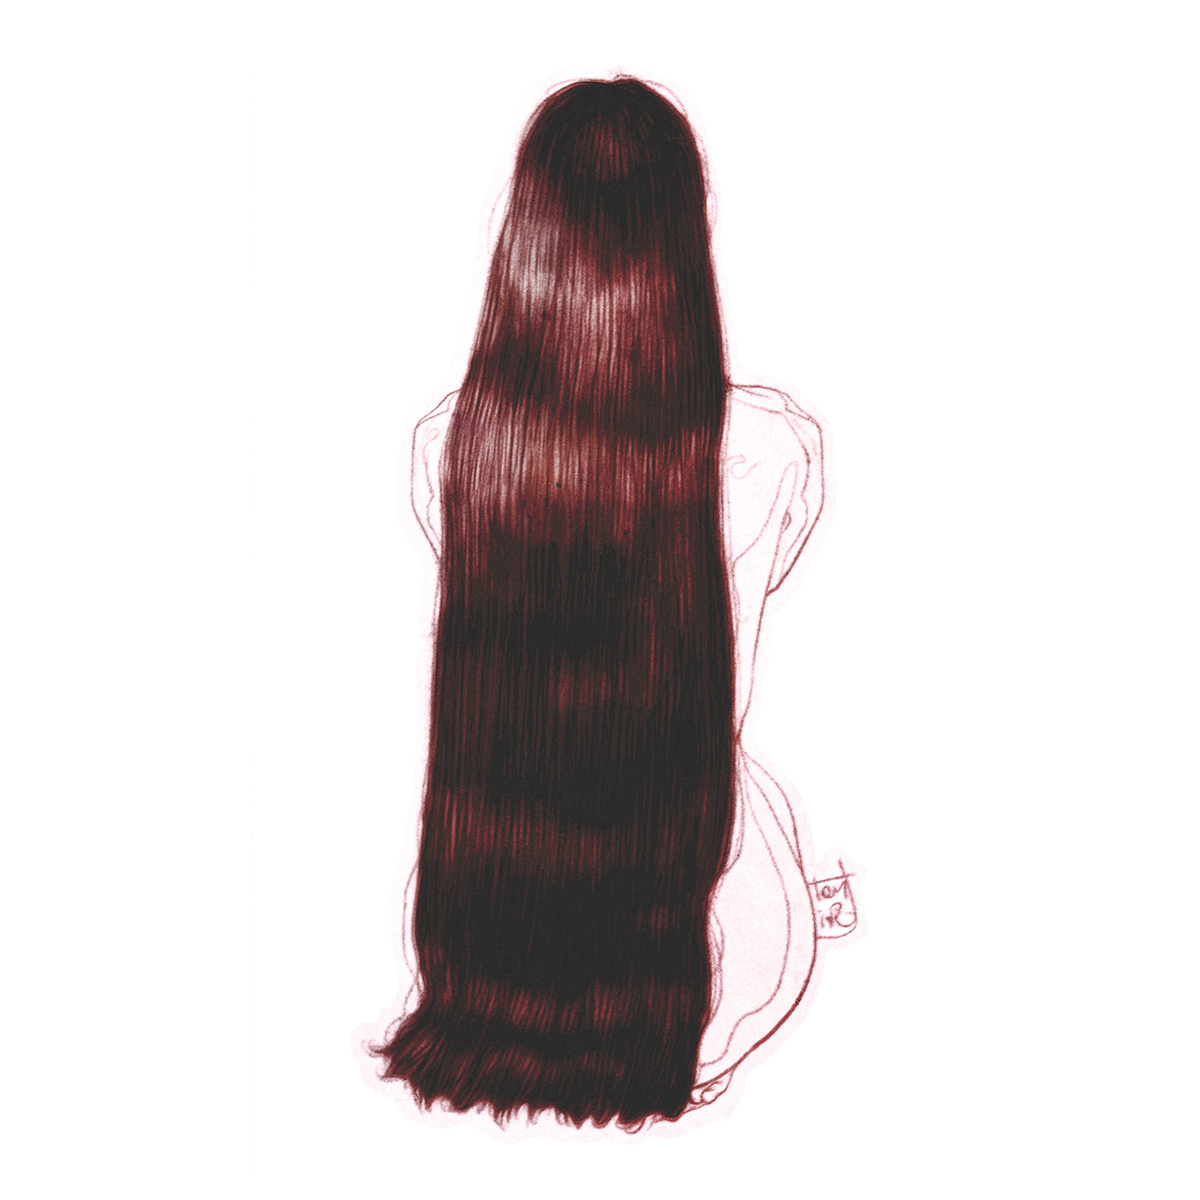 anatomy back bodyscape digitalart femalenude figuredrawing hairstyle lineart muscle portrait